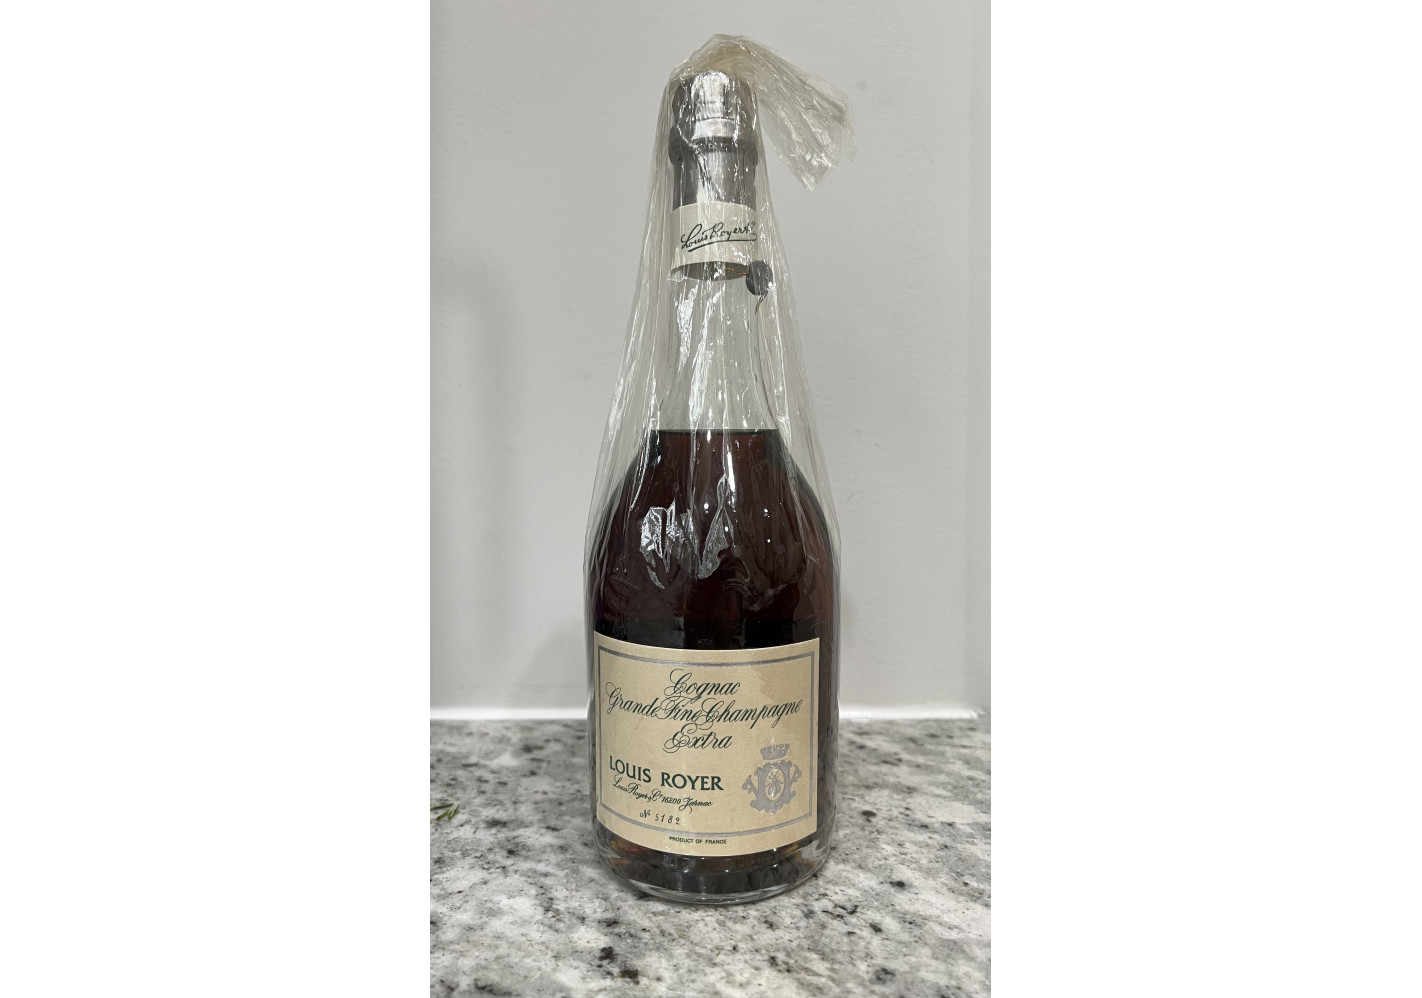 Grande Fine Champagne Extra - Louis Royer Cognac